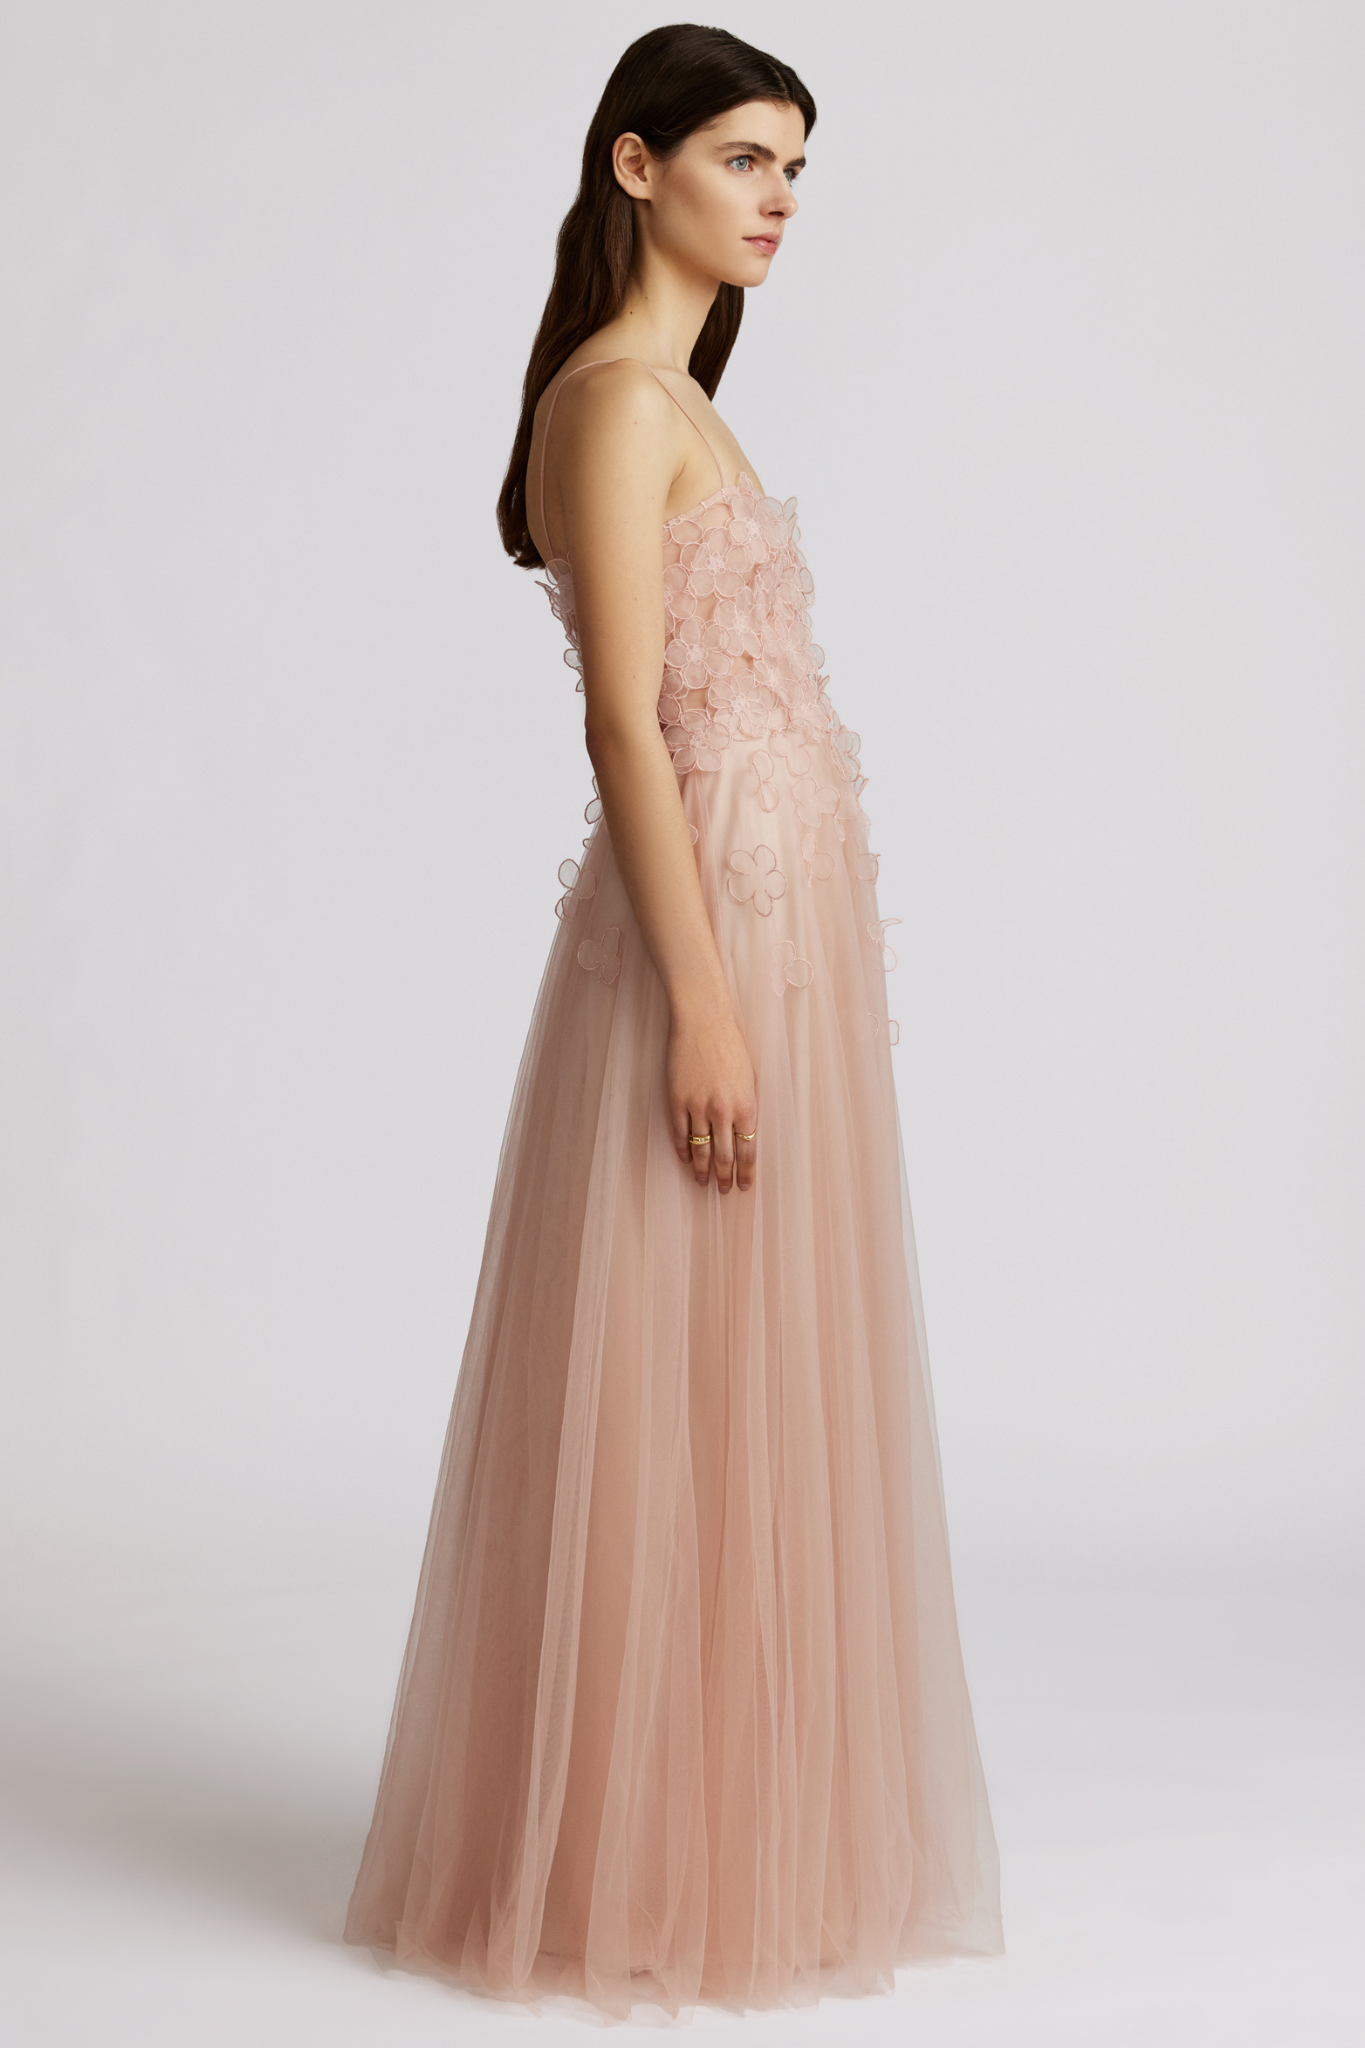 Zaria 3D Applique Tulle Gown by Zac Posen - RENTAL